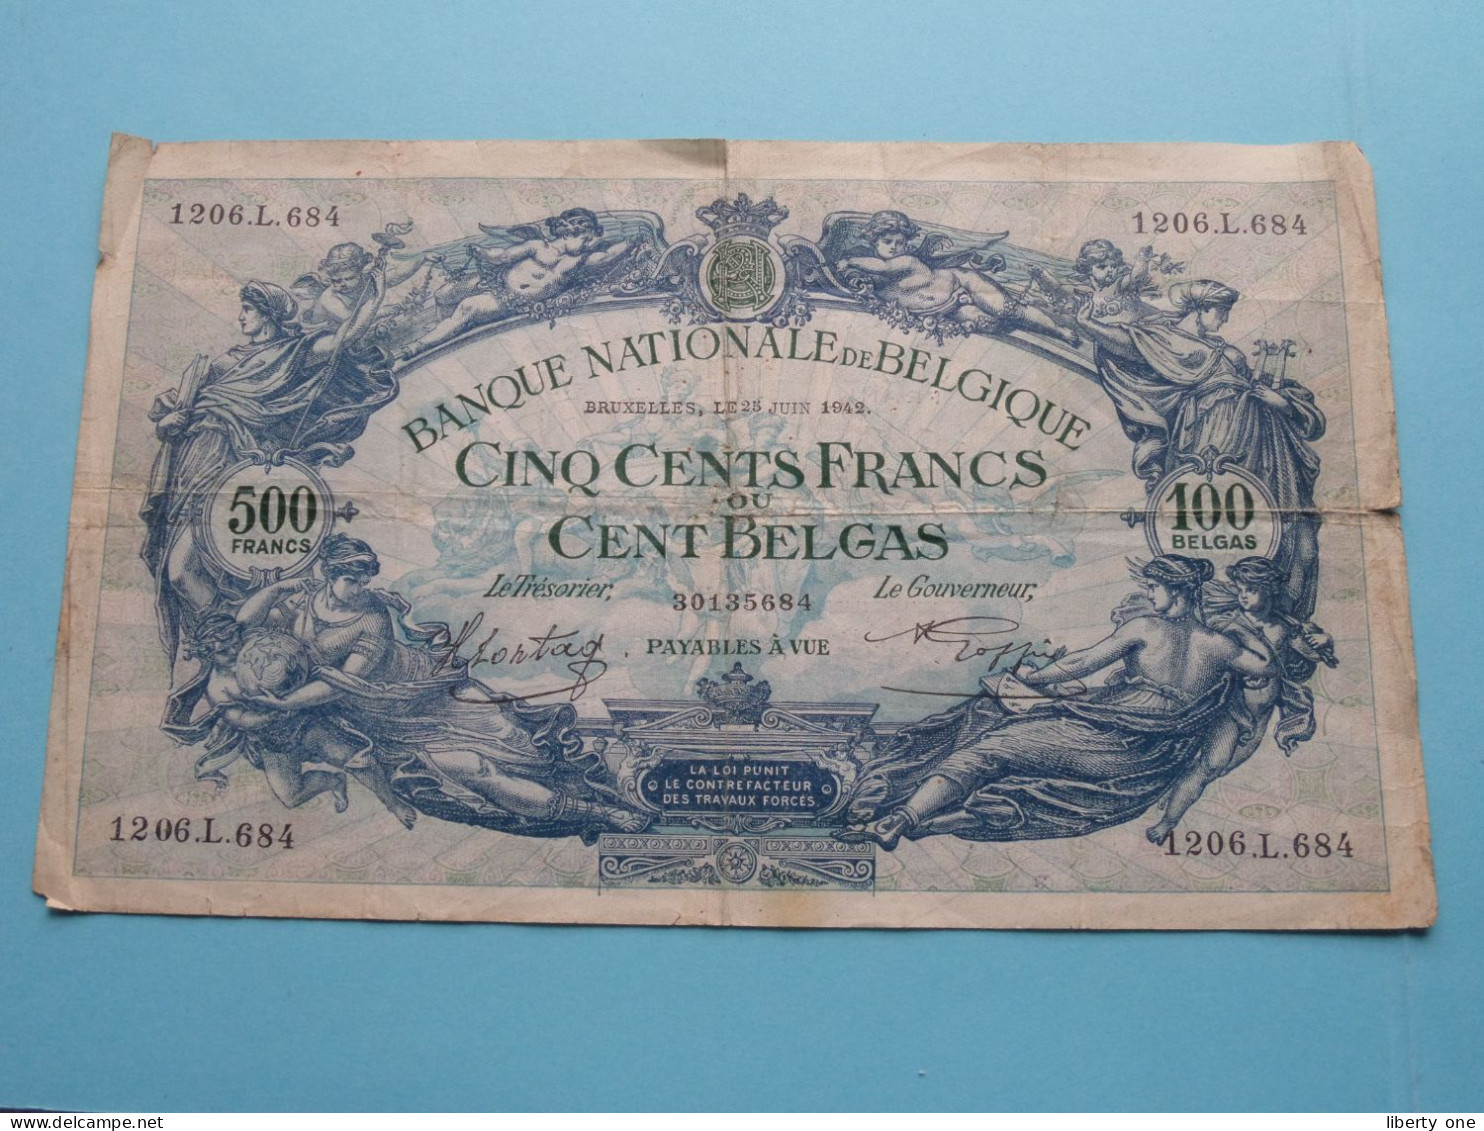 500 Cent Francs / 100 Belgas 1206.L.684/30135684 > 25 Juin 1942 ( Zie SCANS Voor Detail ) België / Belgique / Belgium ! - 500 Francs-100 Belgas